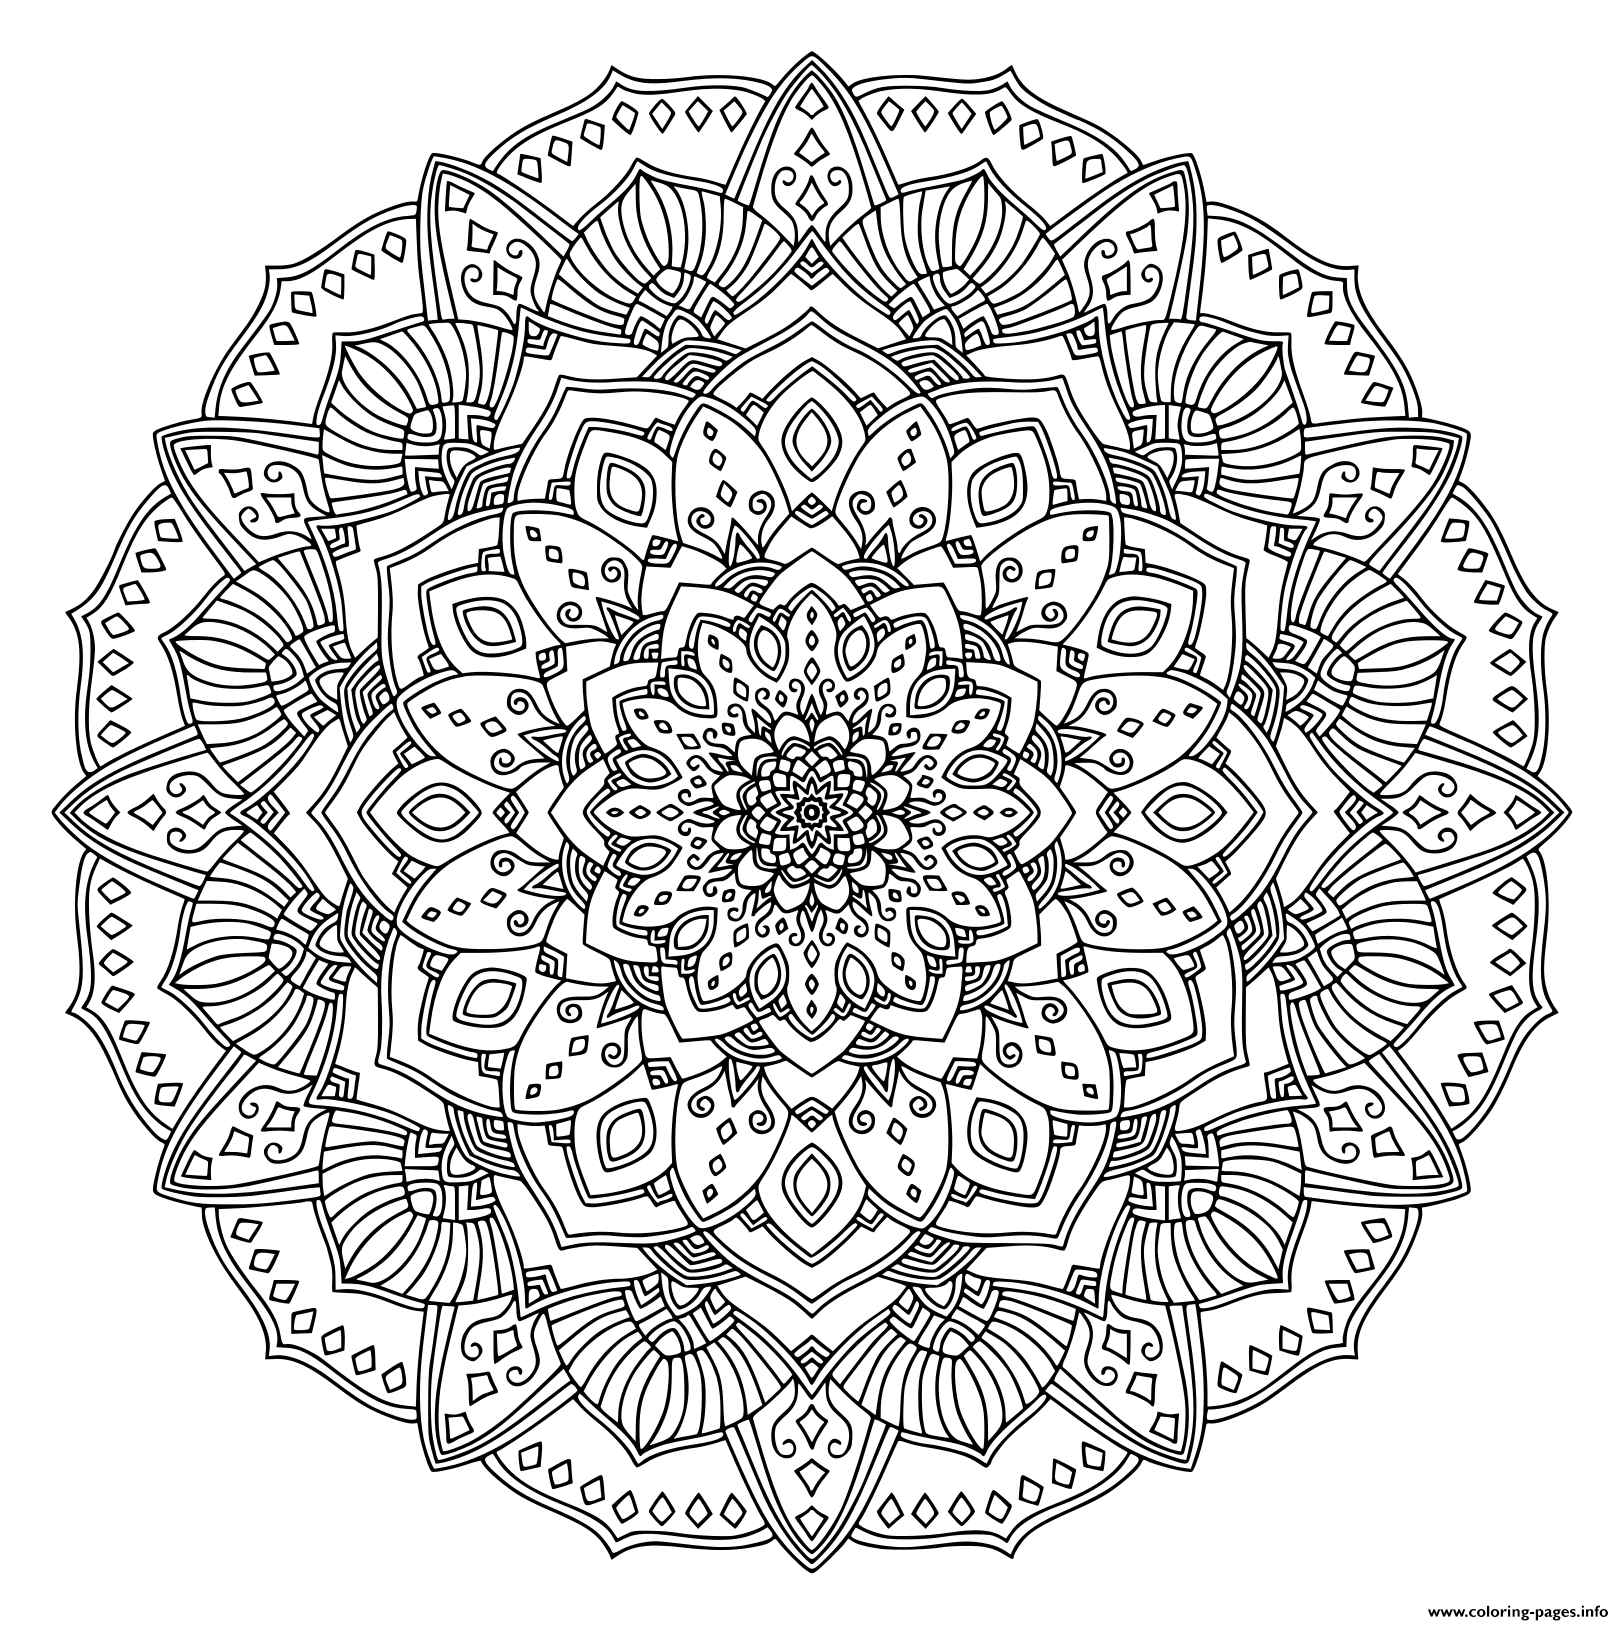 Intricate Black Mandala Coloring Pages Printable avec Dessin A Colorier Mandala 